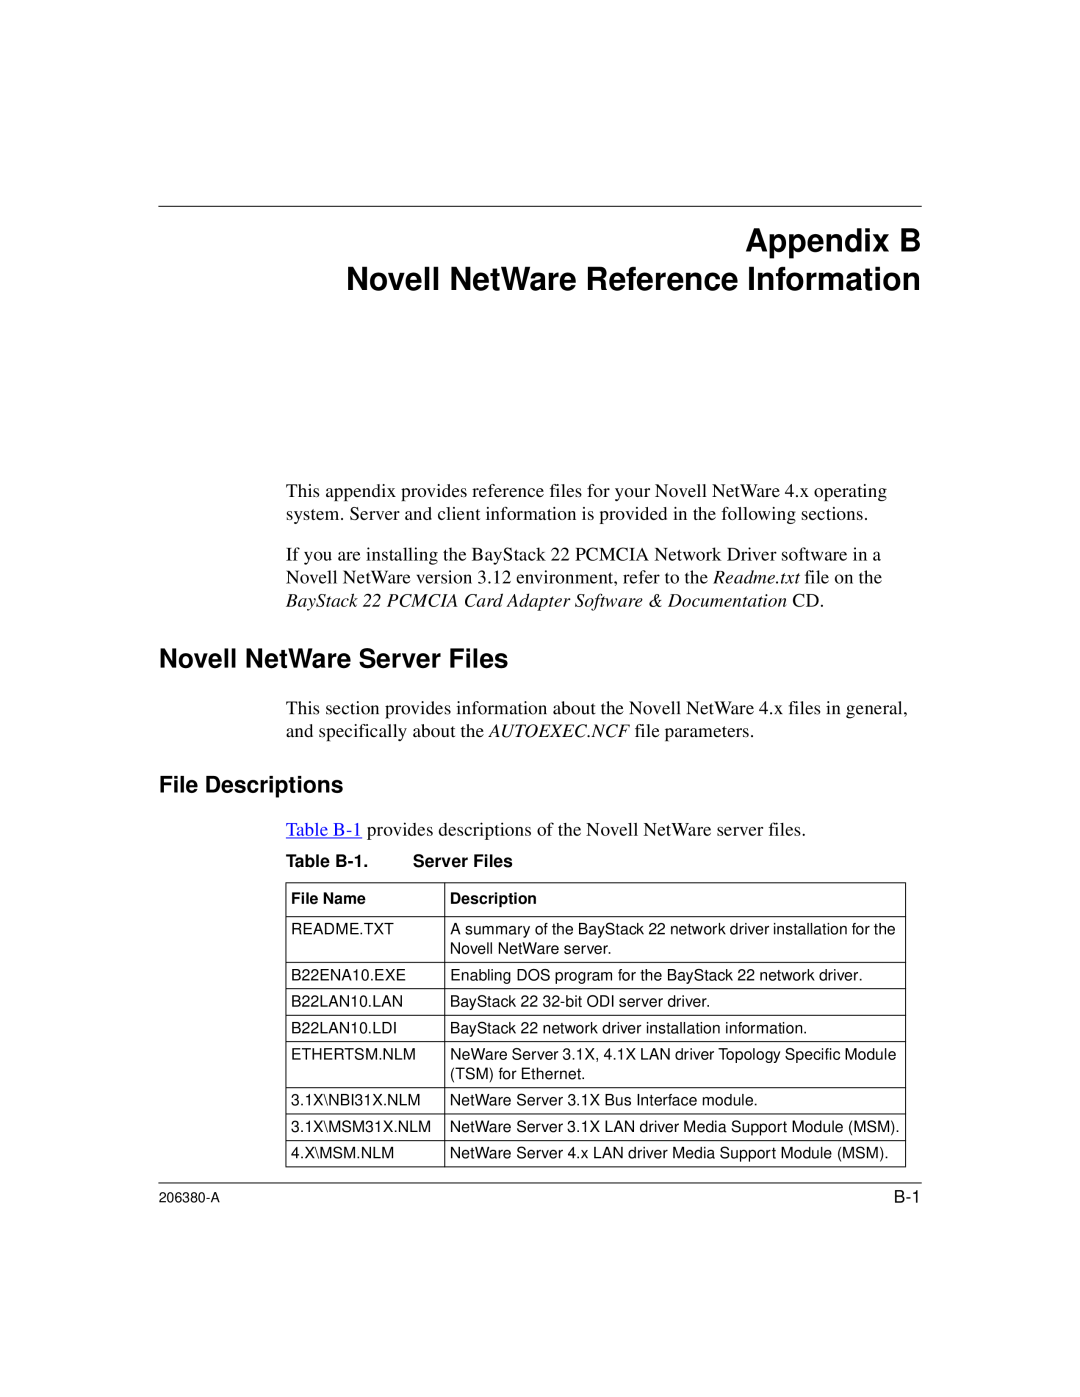 3Com 206380-A manual Appendix B Novell NetWare Reference Information, Novell NetWare Server Files 